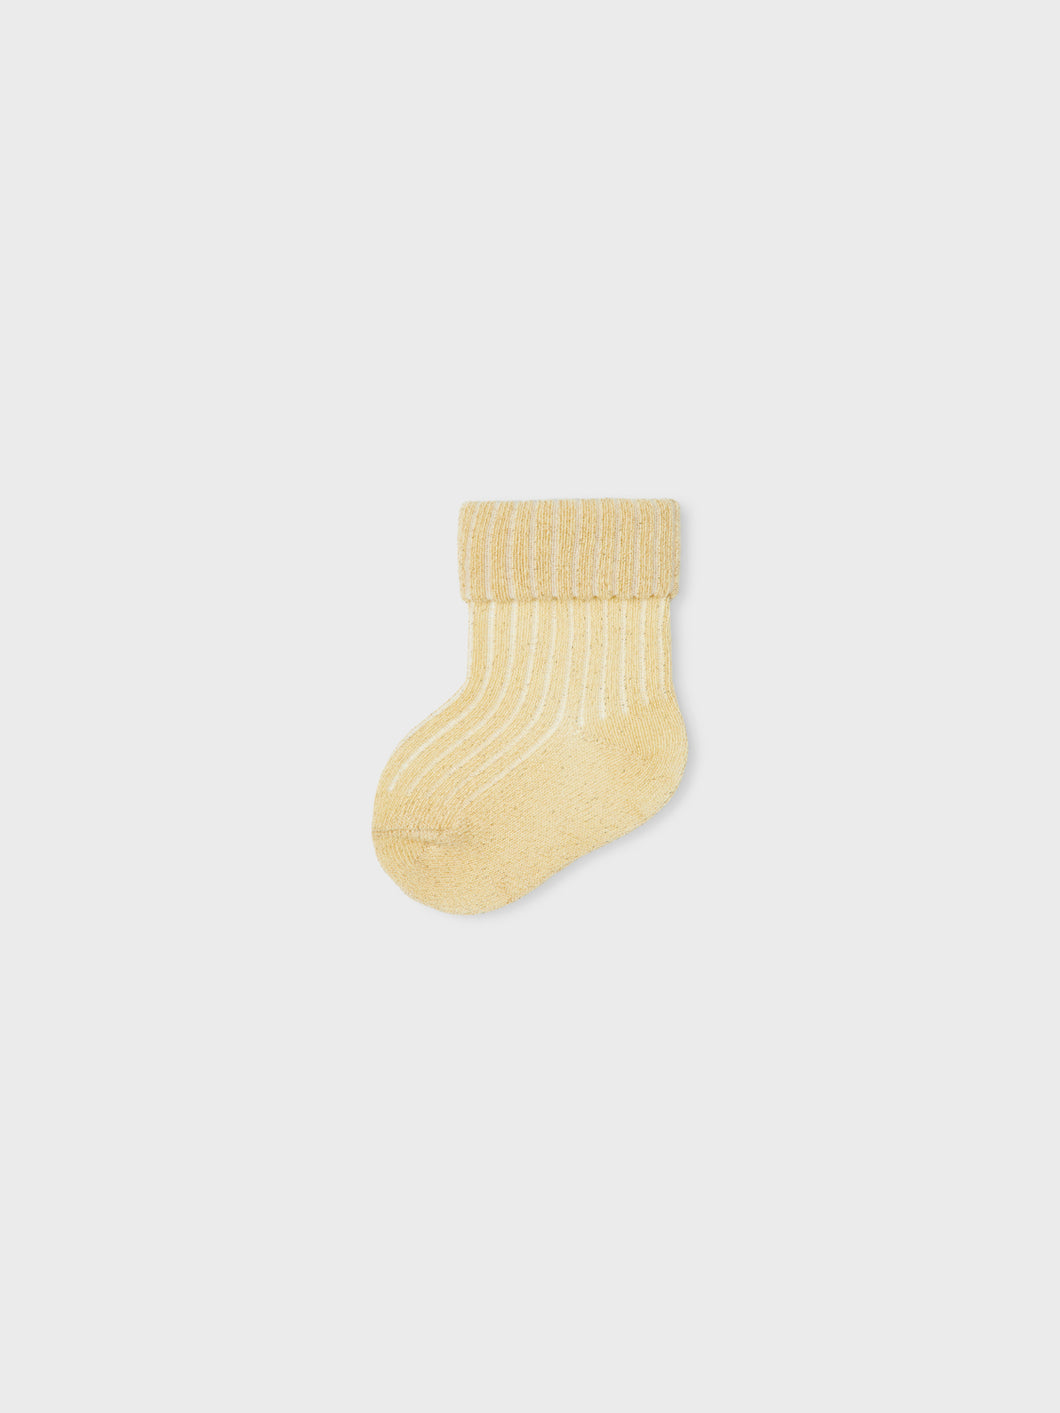 NBFNOBBA Socks - Double Cream